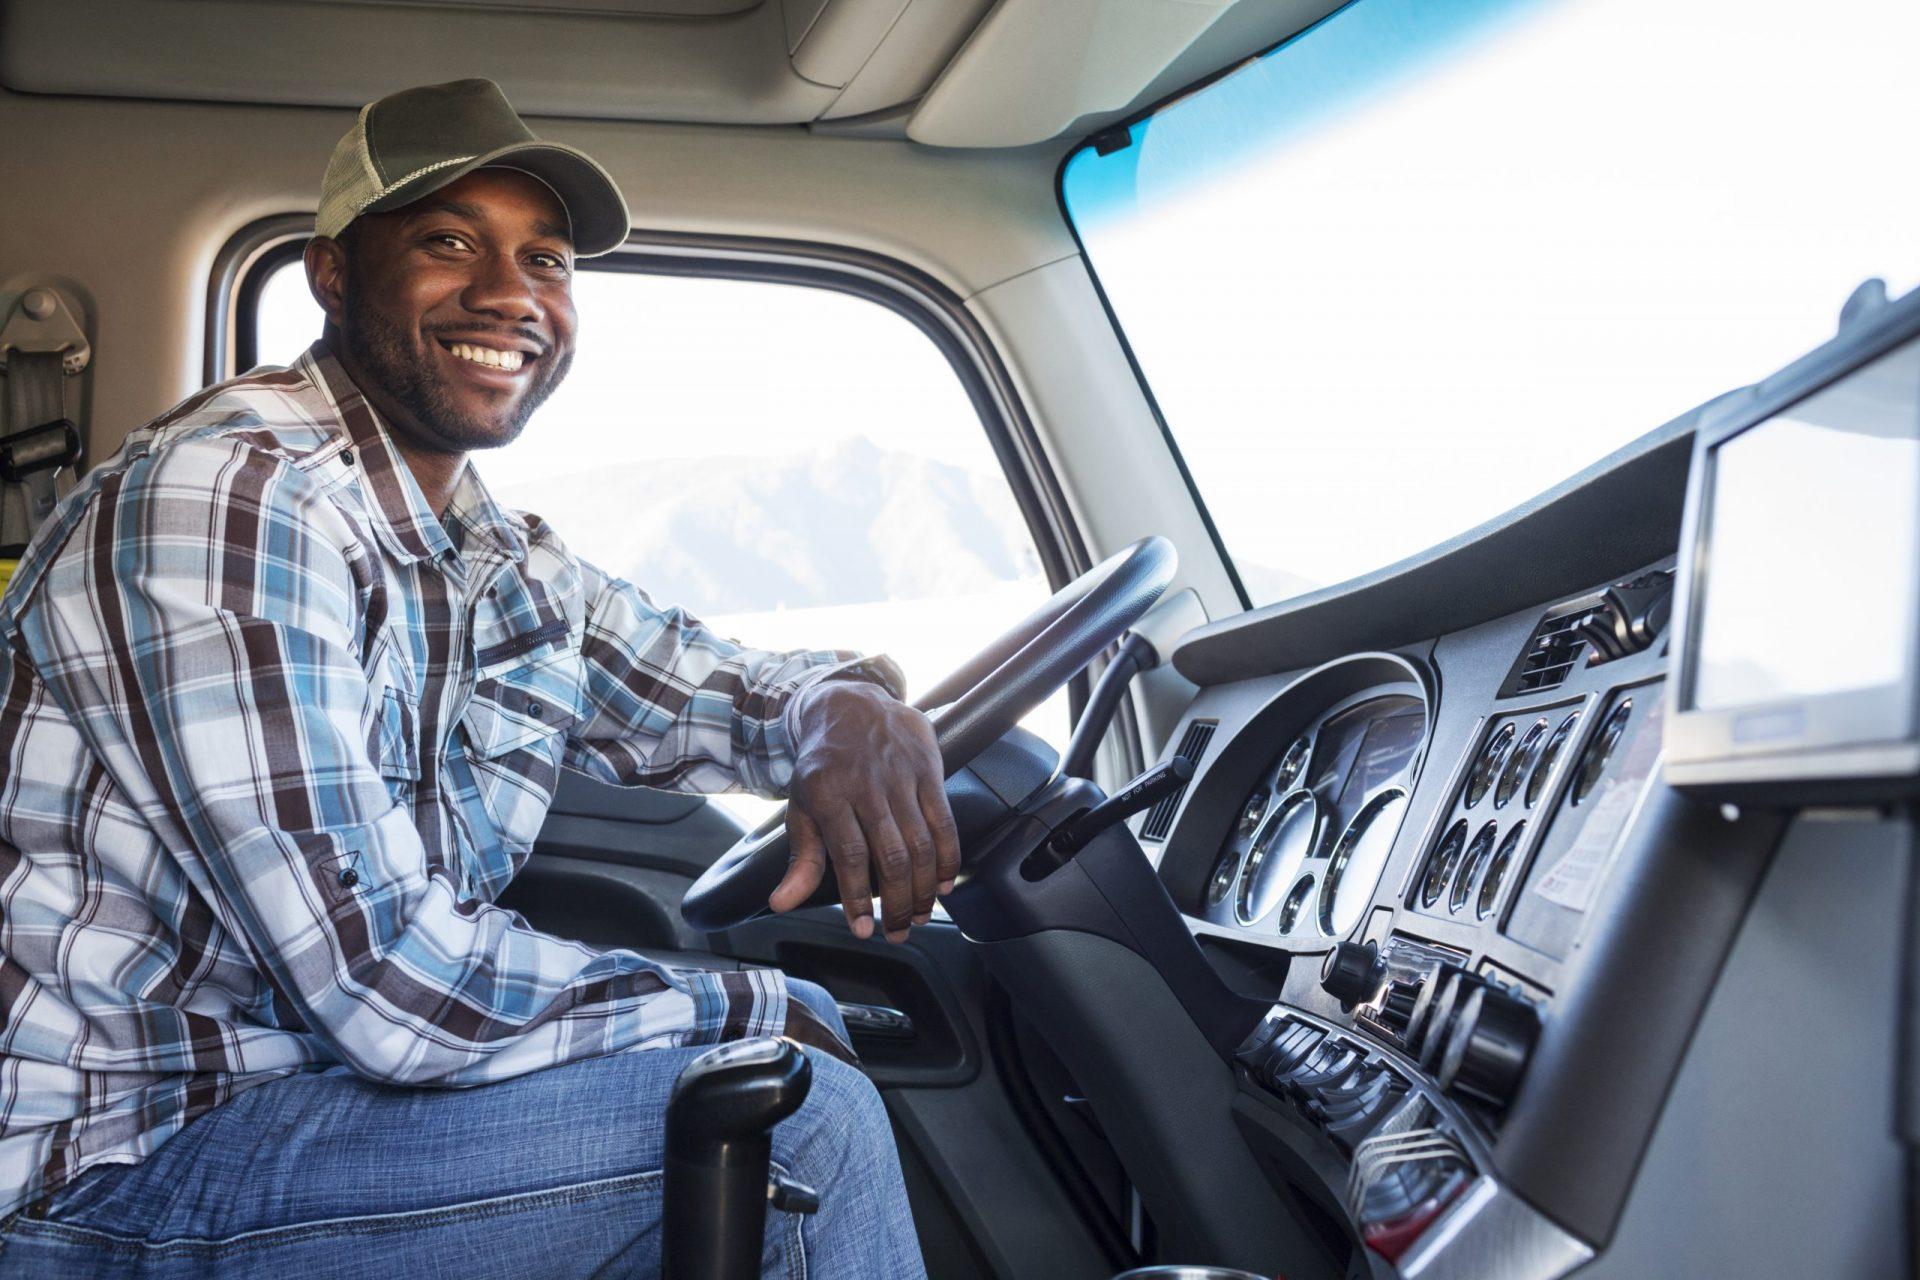 Truck Driver Jobs at Galaxy Global with USA Visa Sponsorship